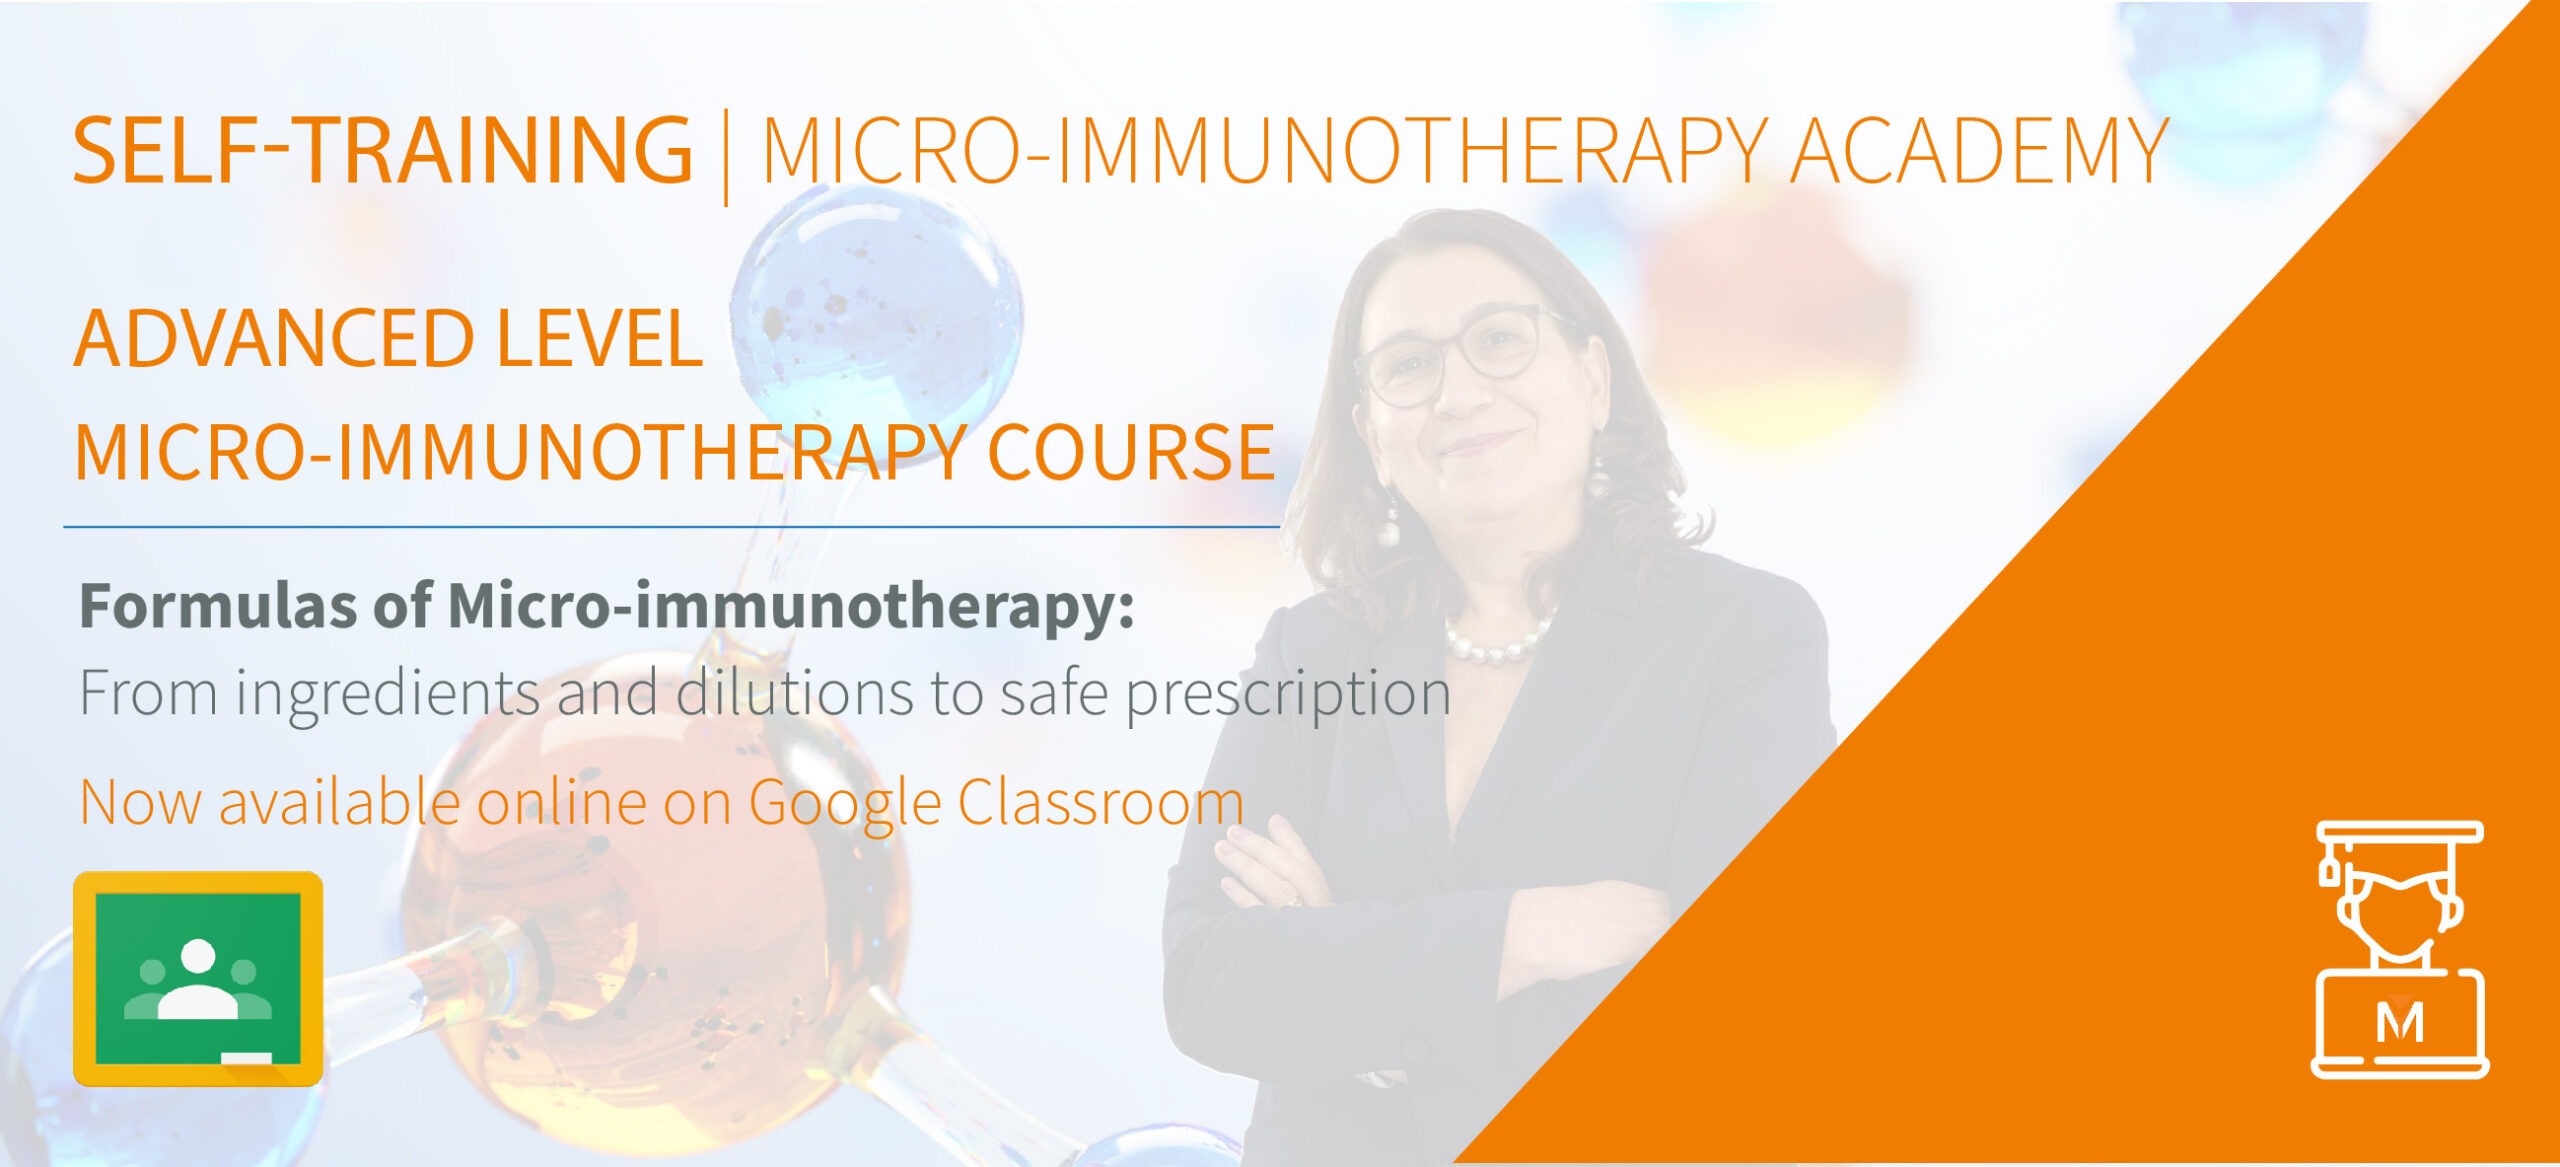 Self-training: formulas of micro-immunotherapy